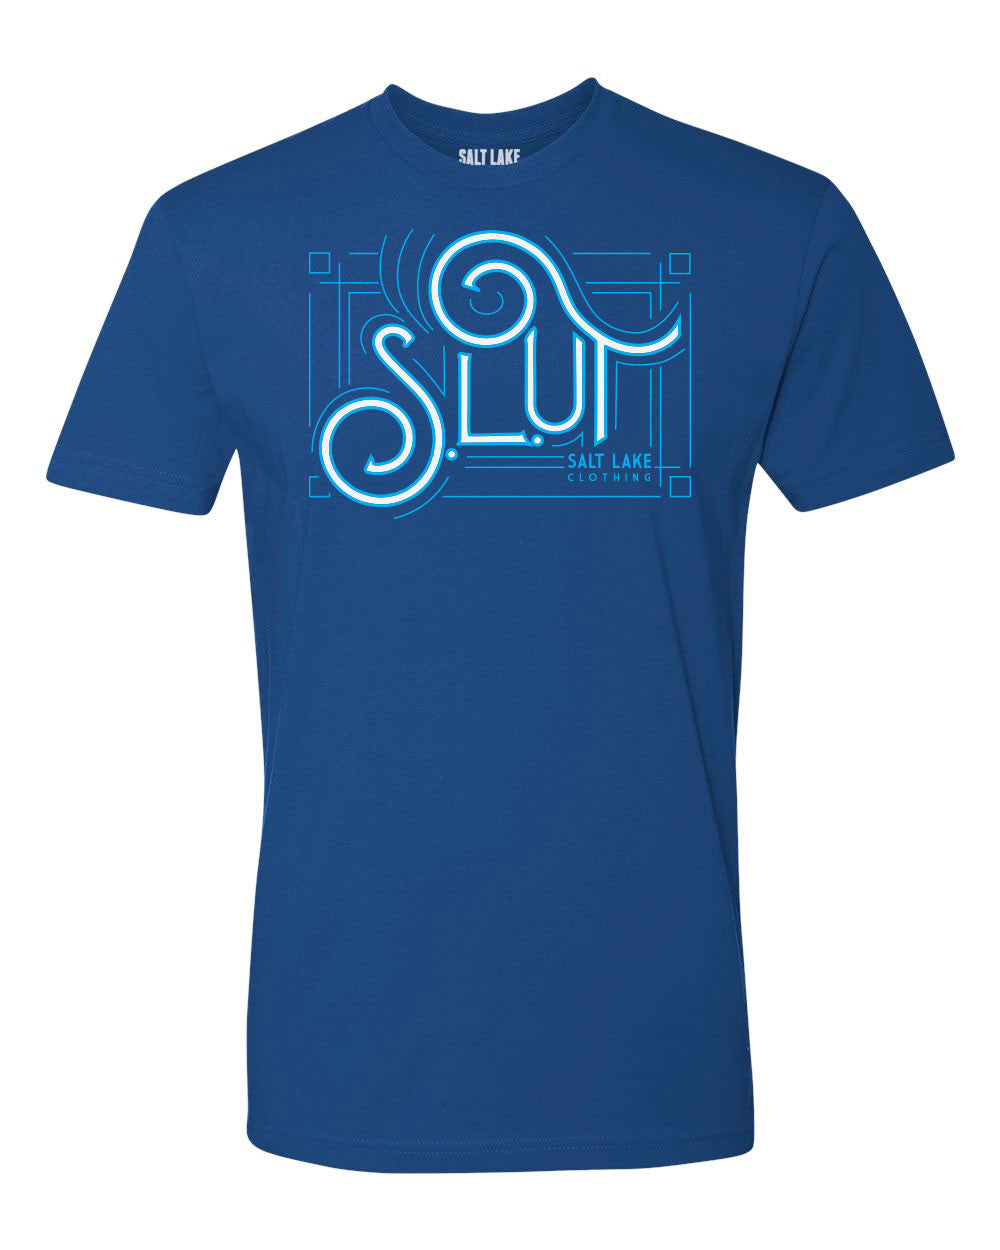 S.L.UT Deco T-shirt